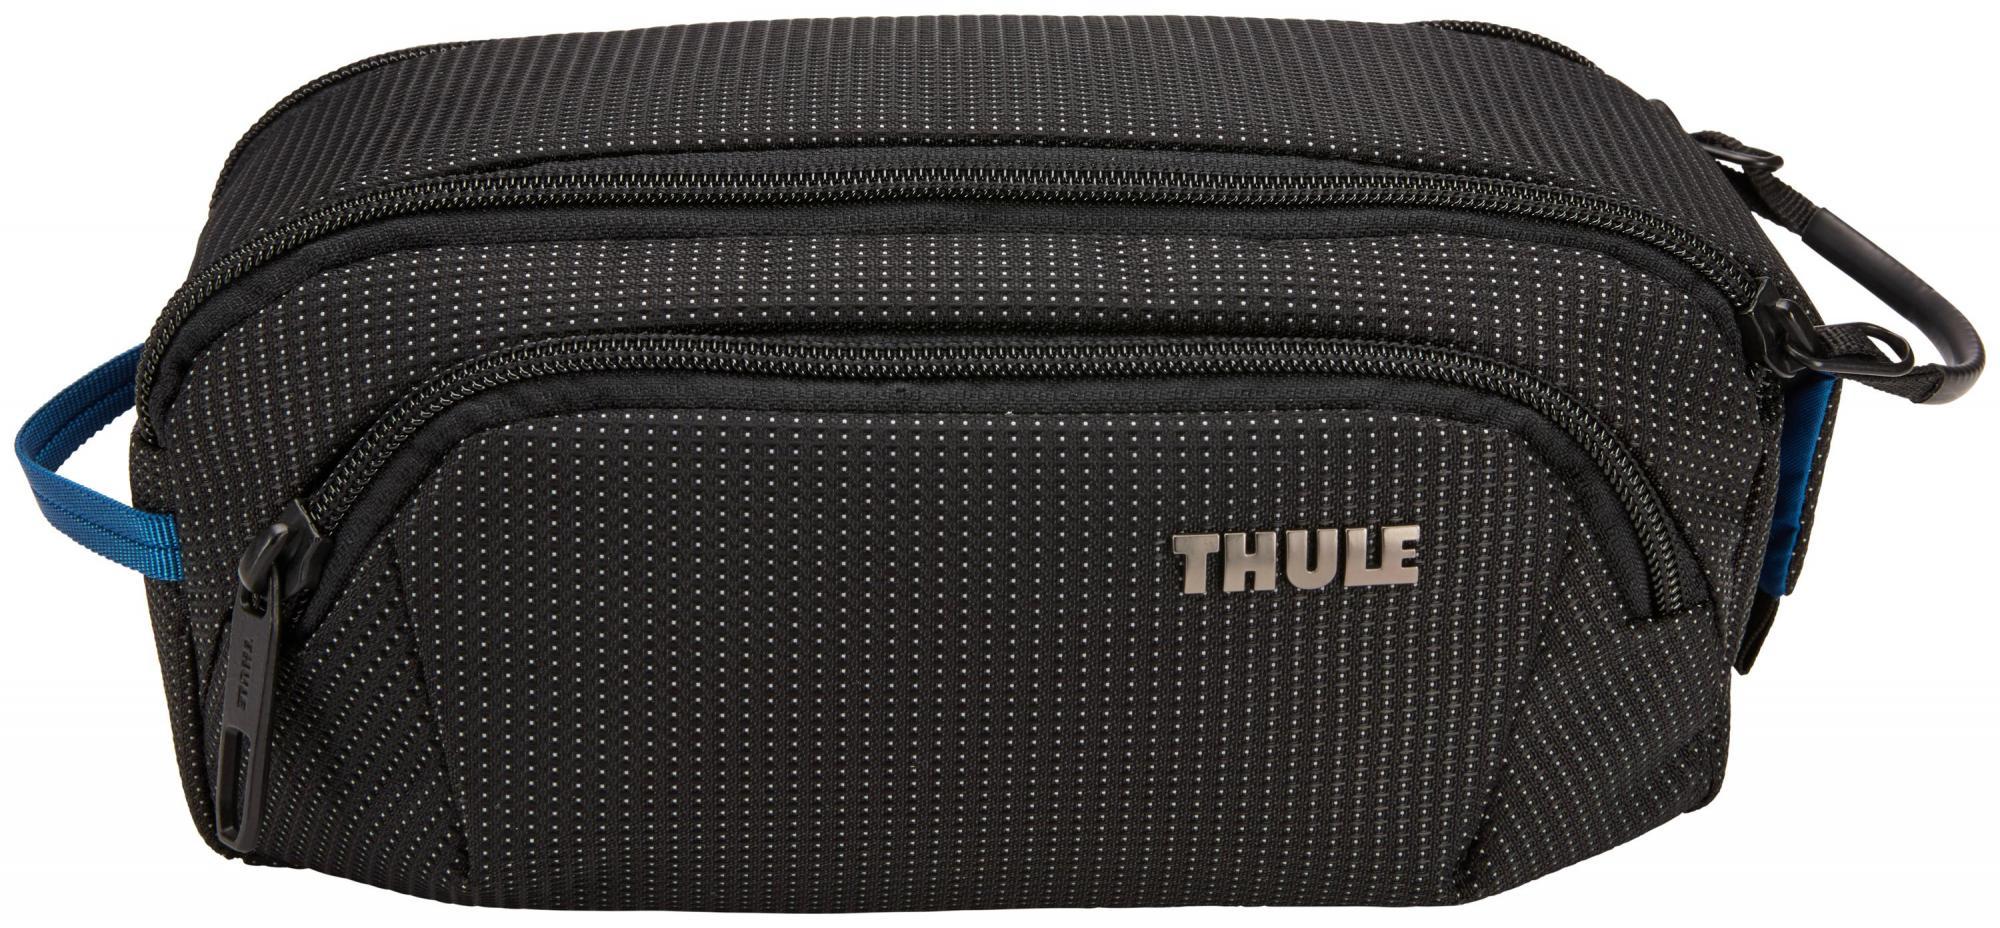 Thule - Crossover 2 Toiletry Bag - Black